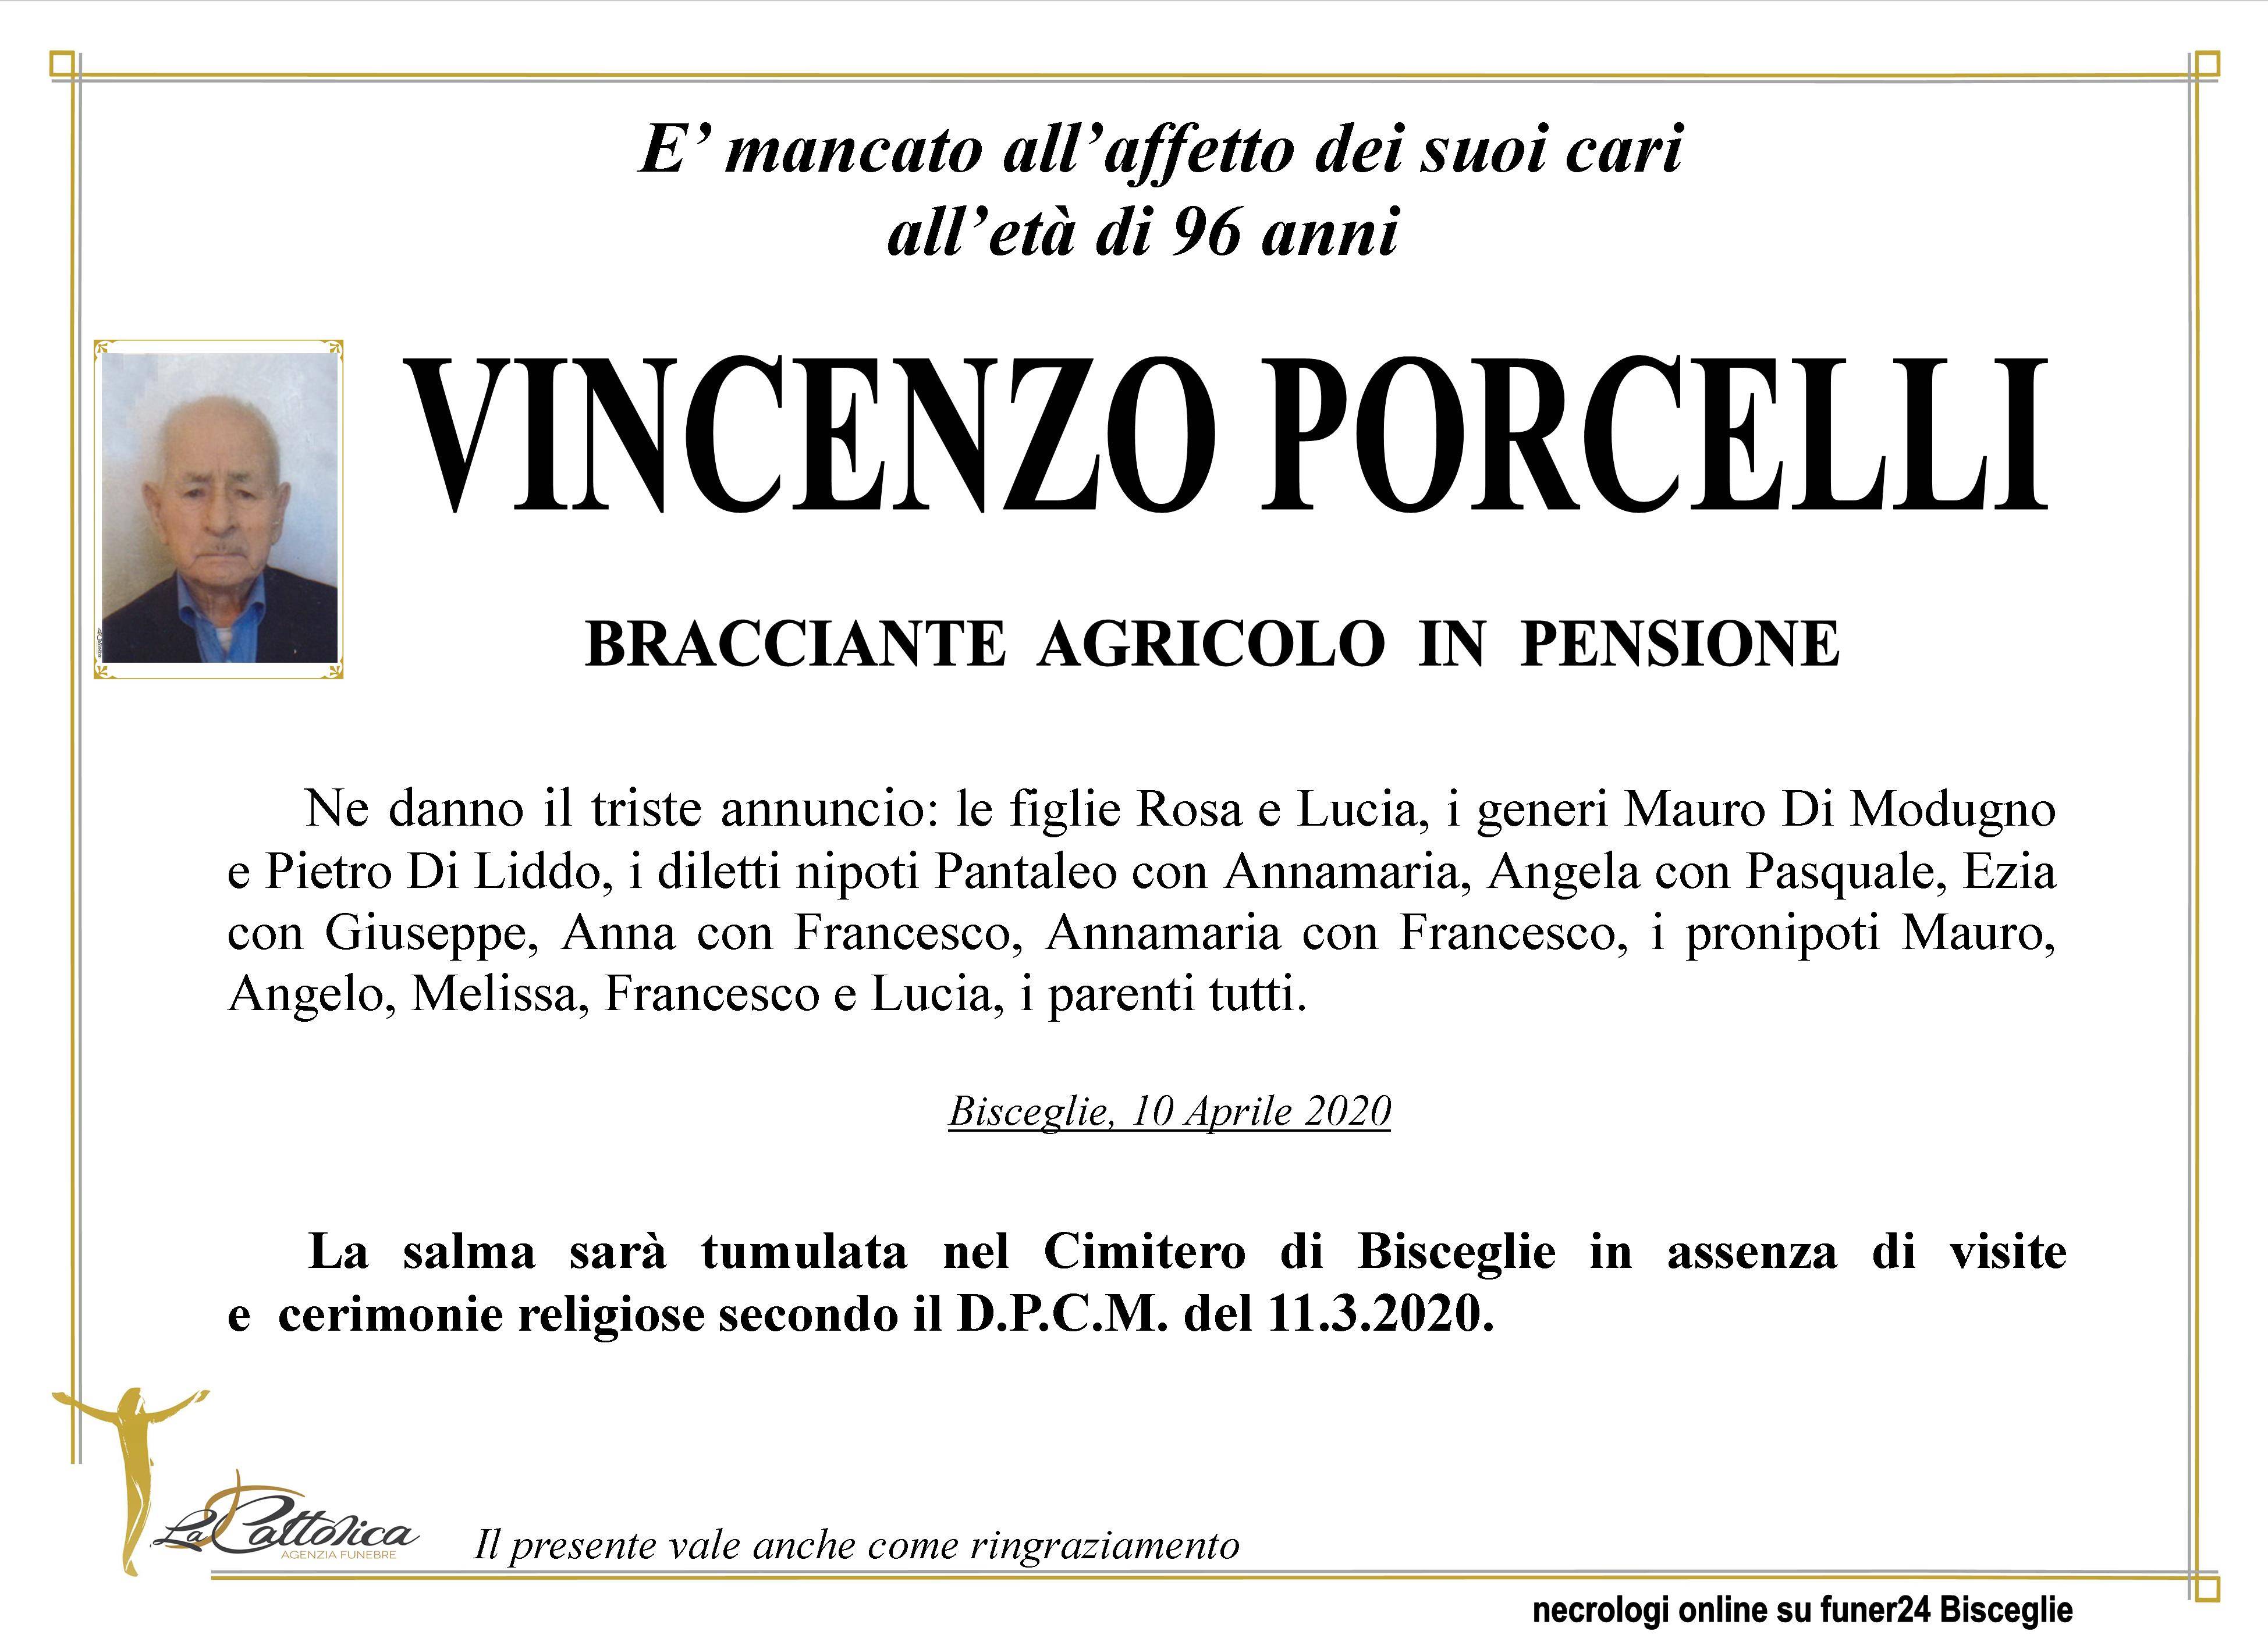 Vincenzo Porcelli